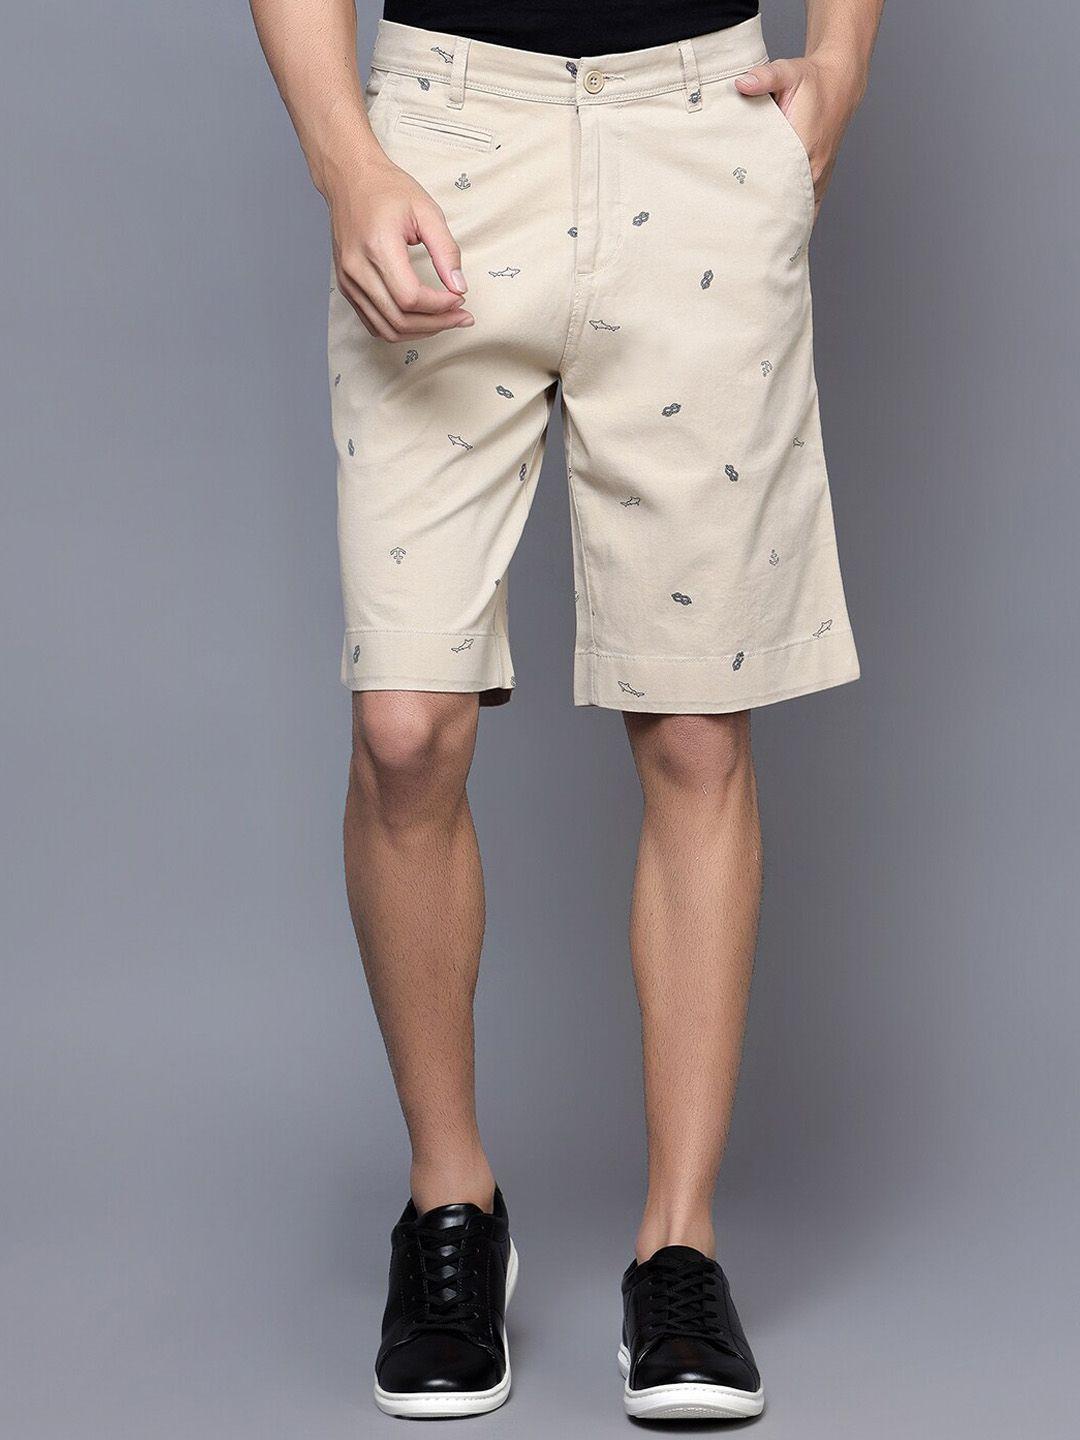 cantabil men conversational printed mid-rise knee length cotton chino shorts